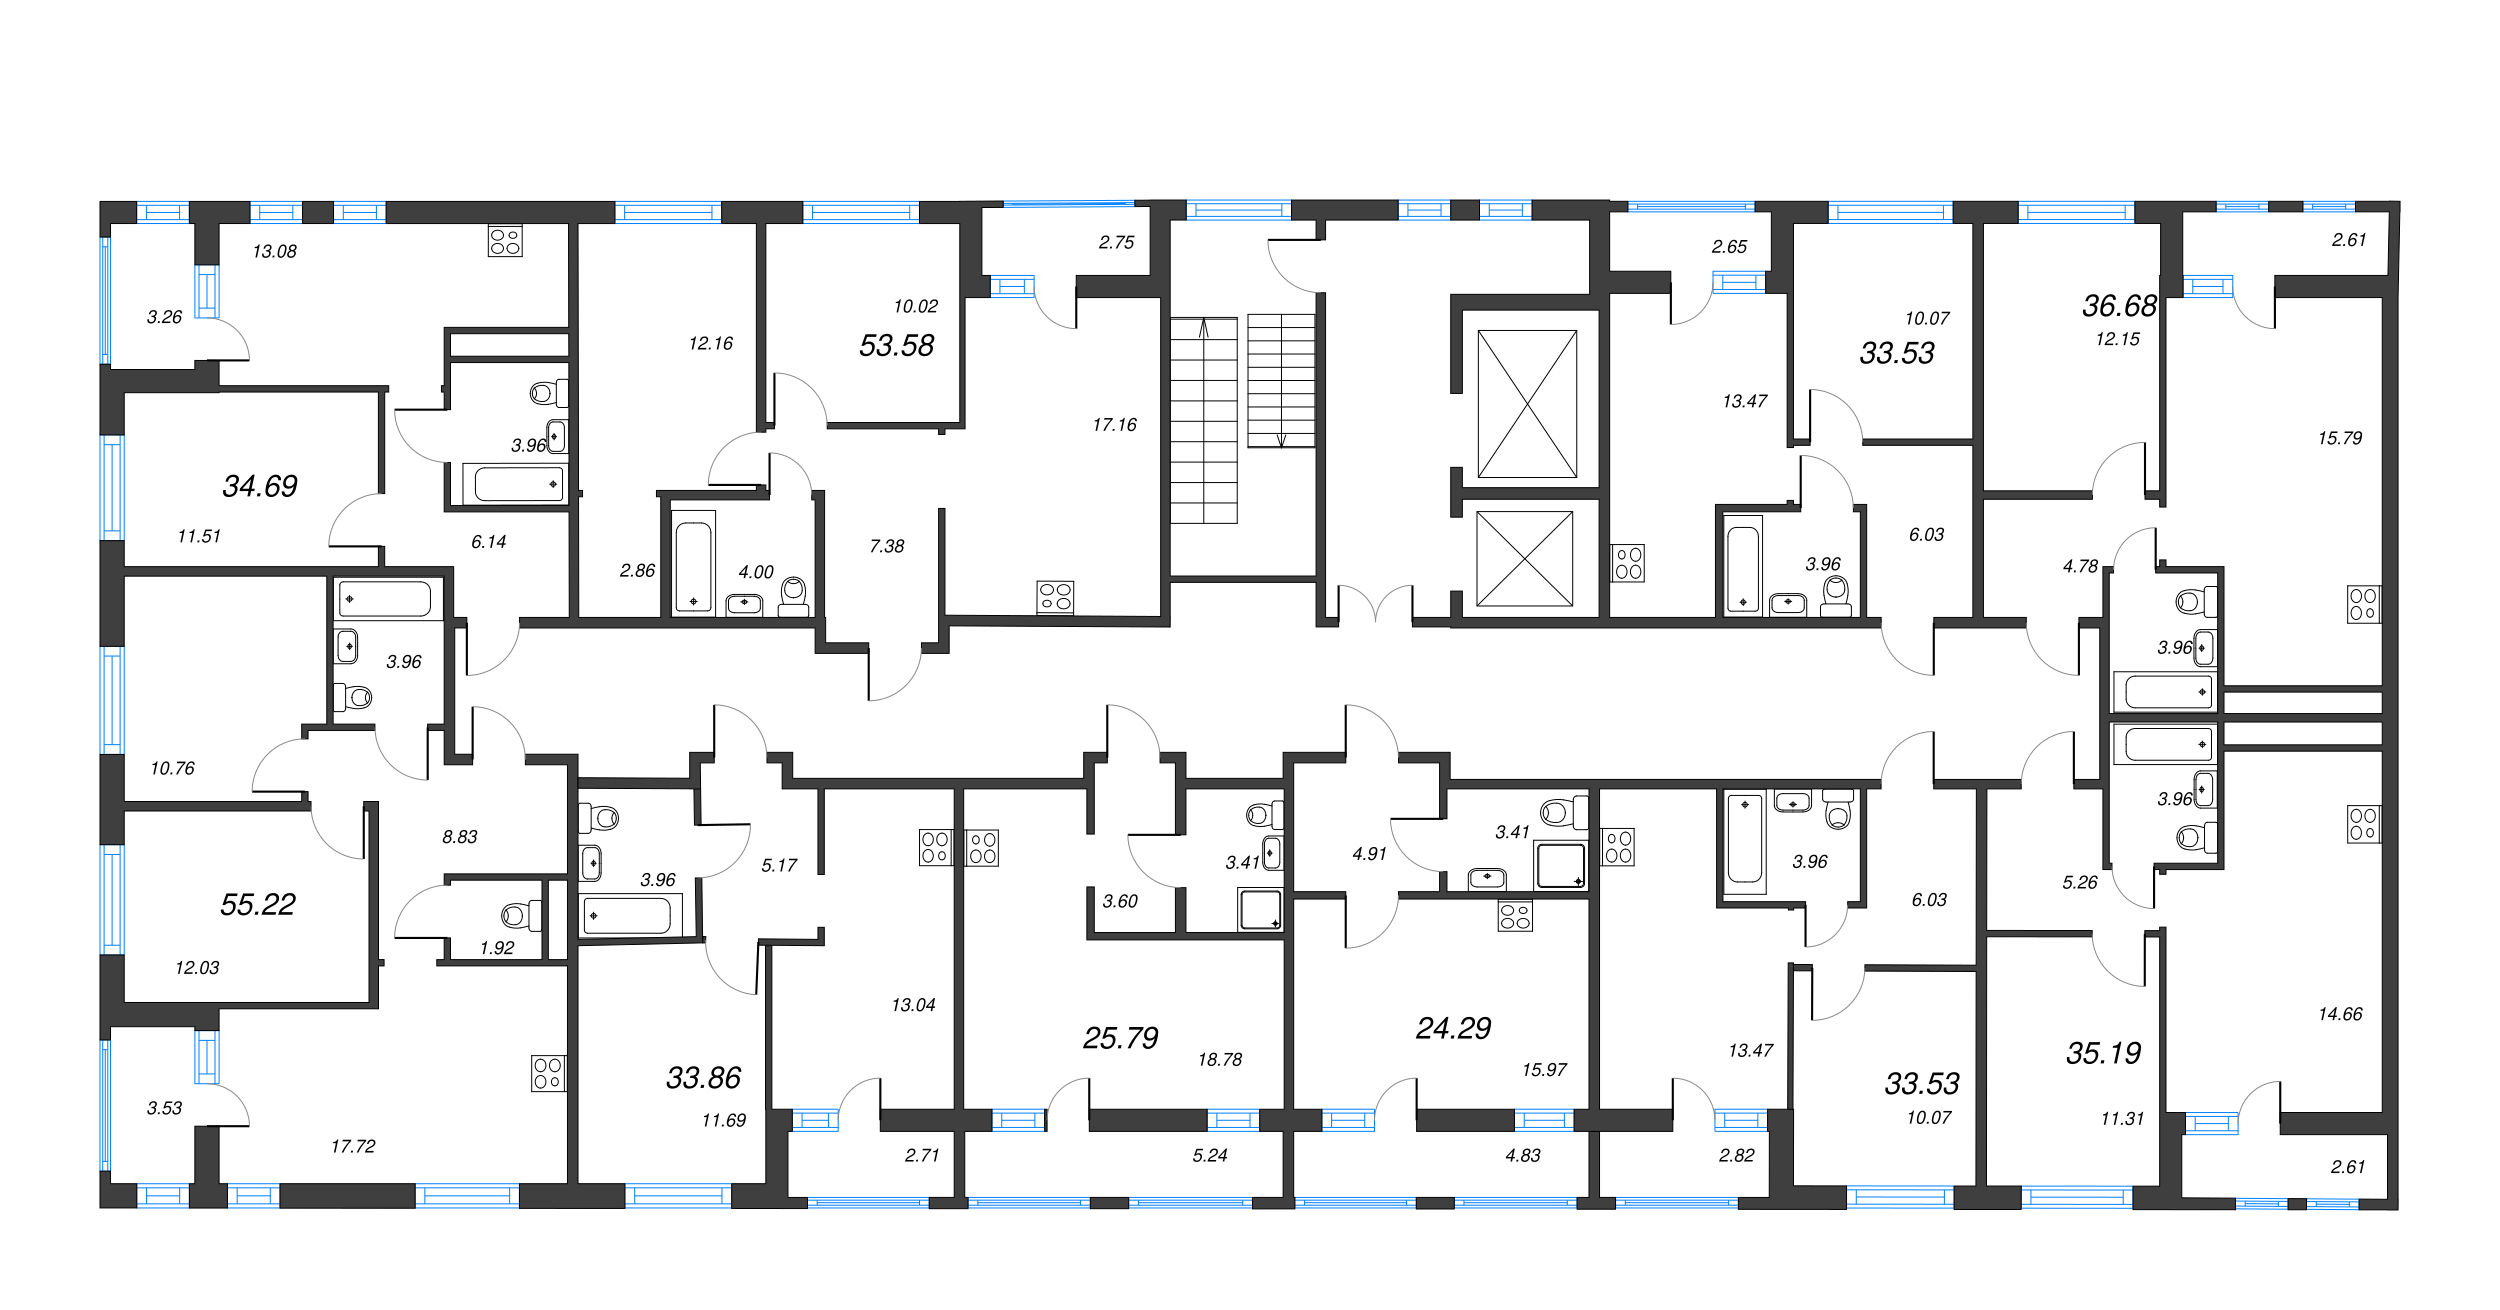 2-комнатная (Евро) квартира, 33.53 м² - планировка этажа